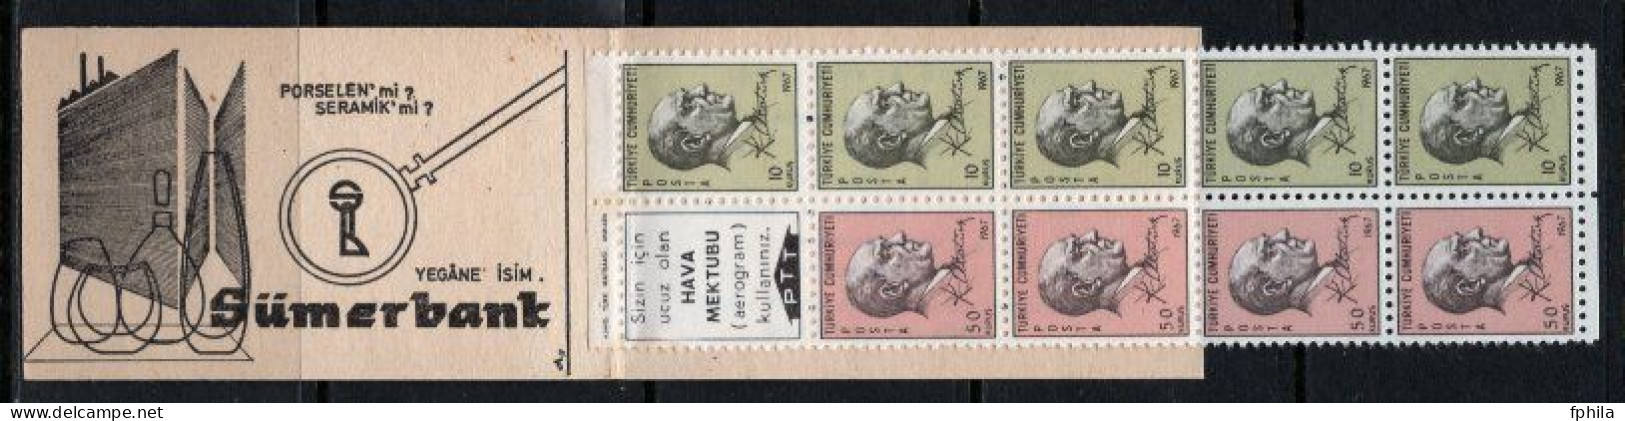 1967 TURKEY ATATURK REGULAR ISSUE STAMPS 4x50k, 5x10k BOOKLET MNH ** - Carnets